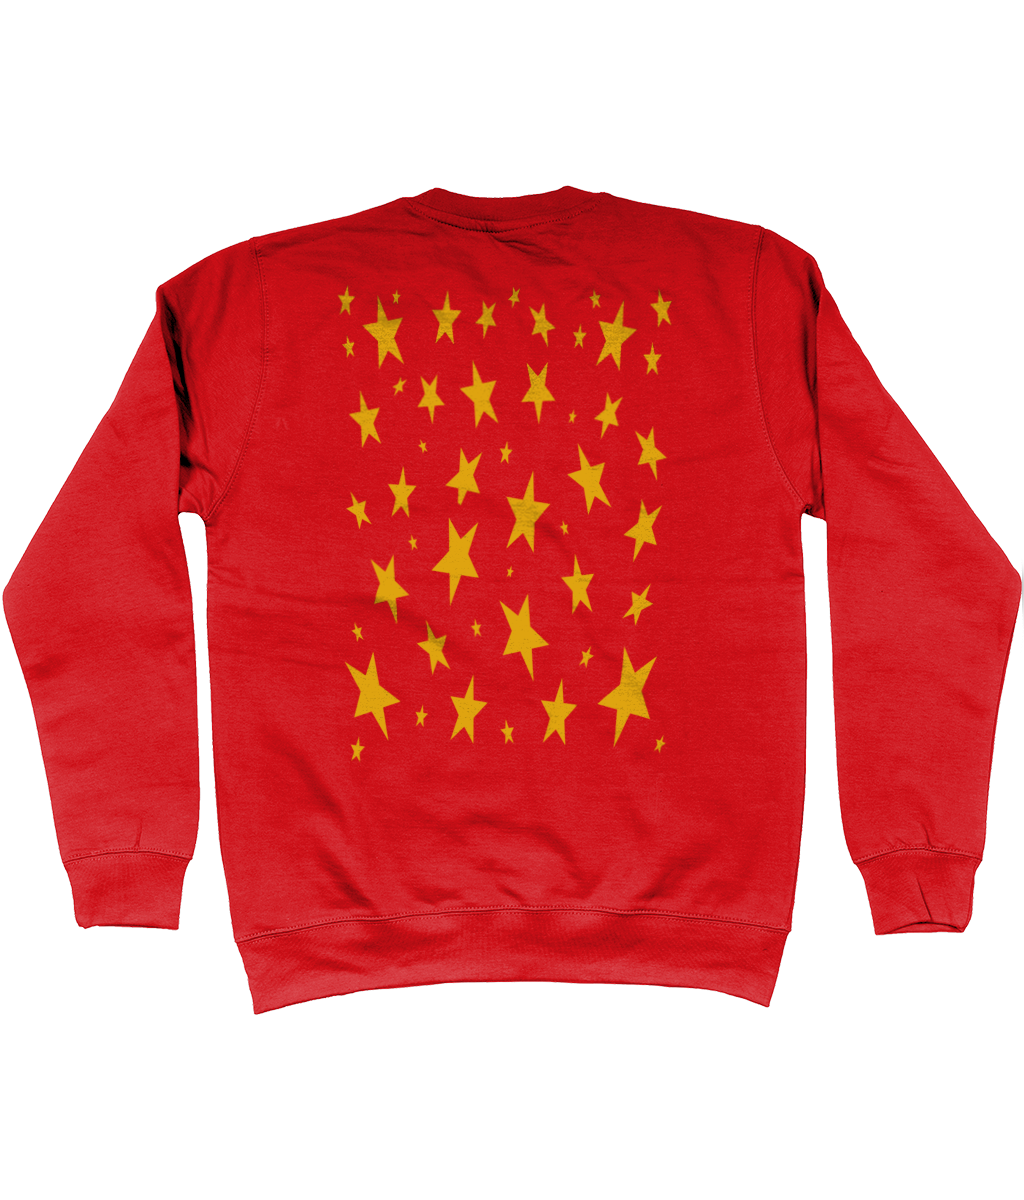 Sweatshirt = Back with the stars